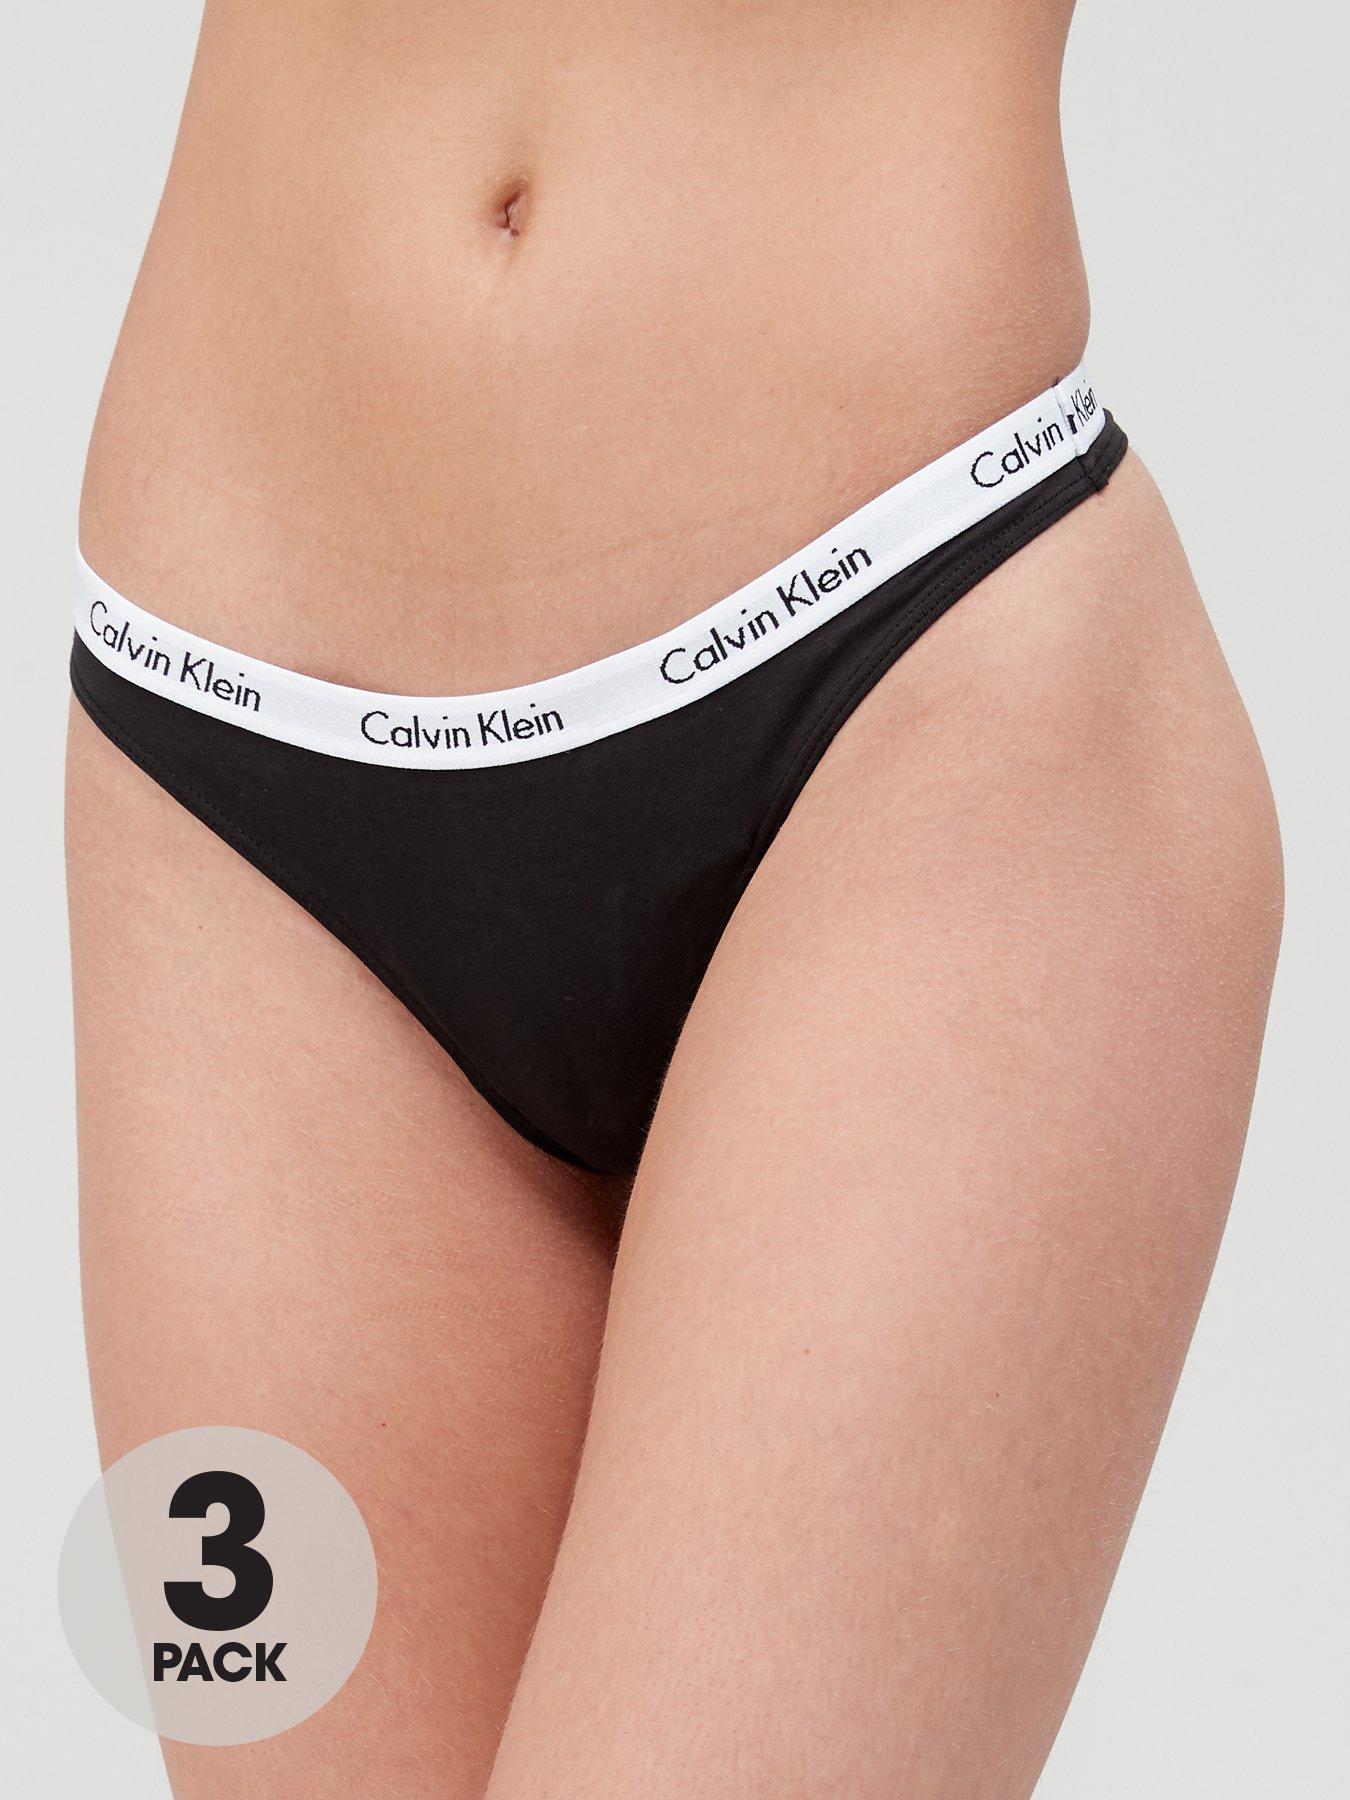 Calvin Klein 3-pack thong in black